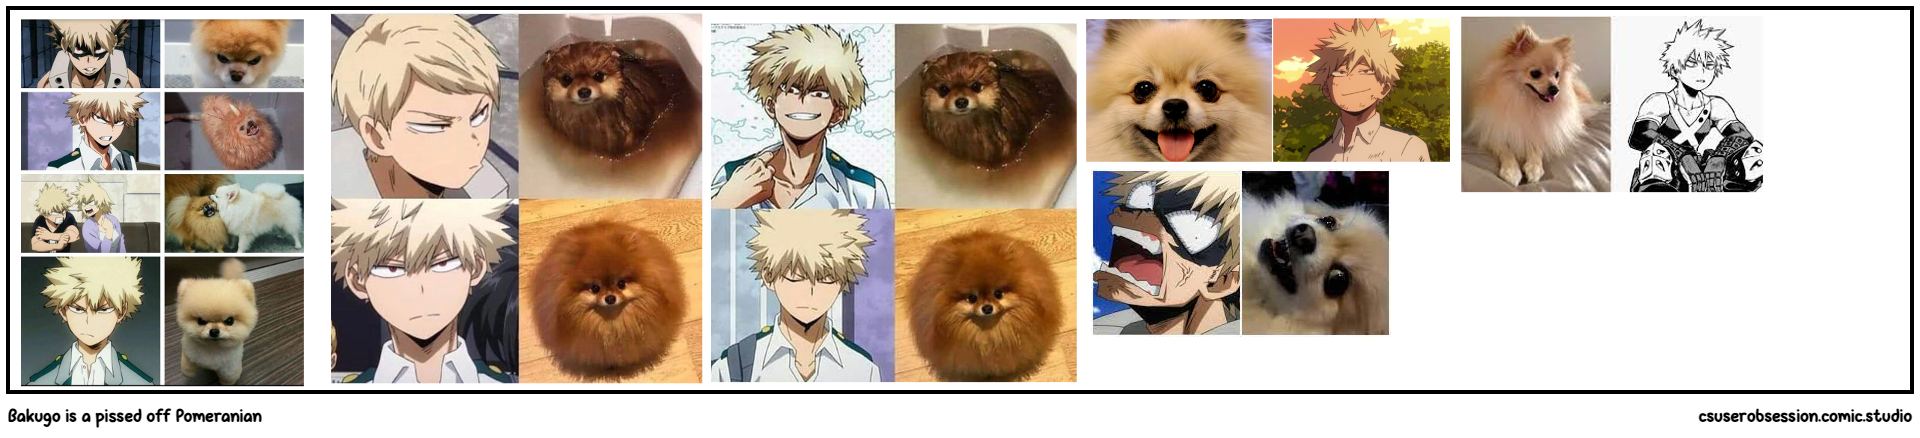 Bakugo is a pissed off Pomeranian